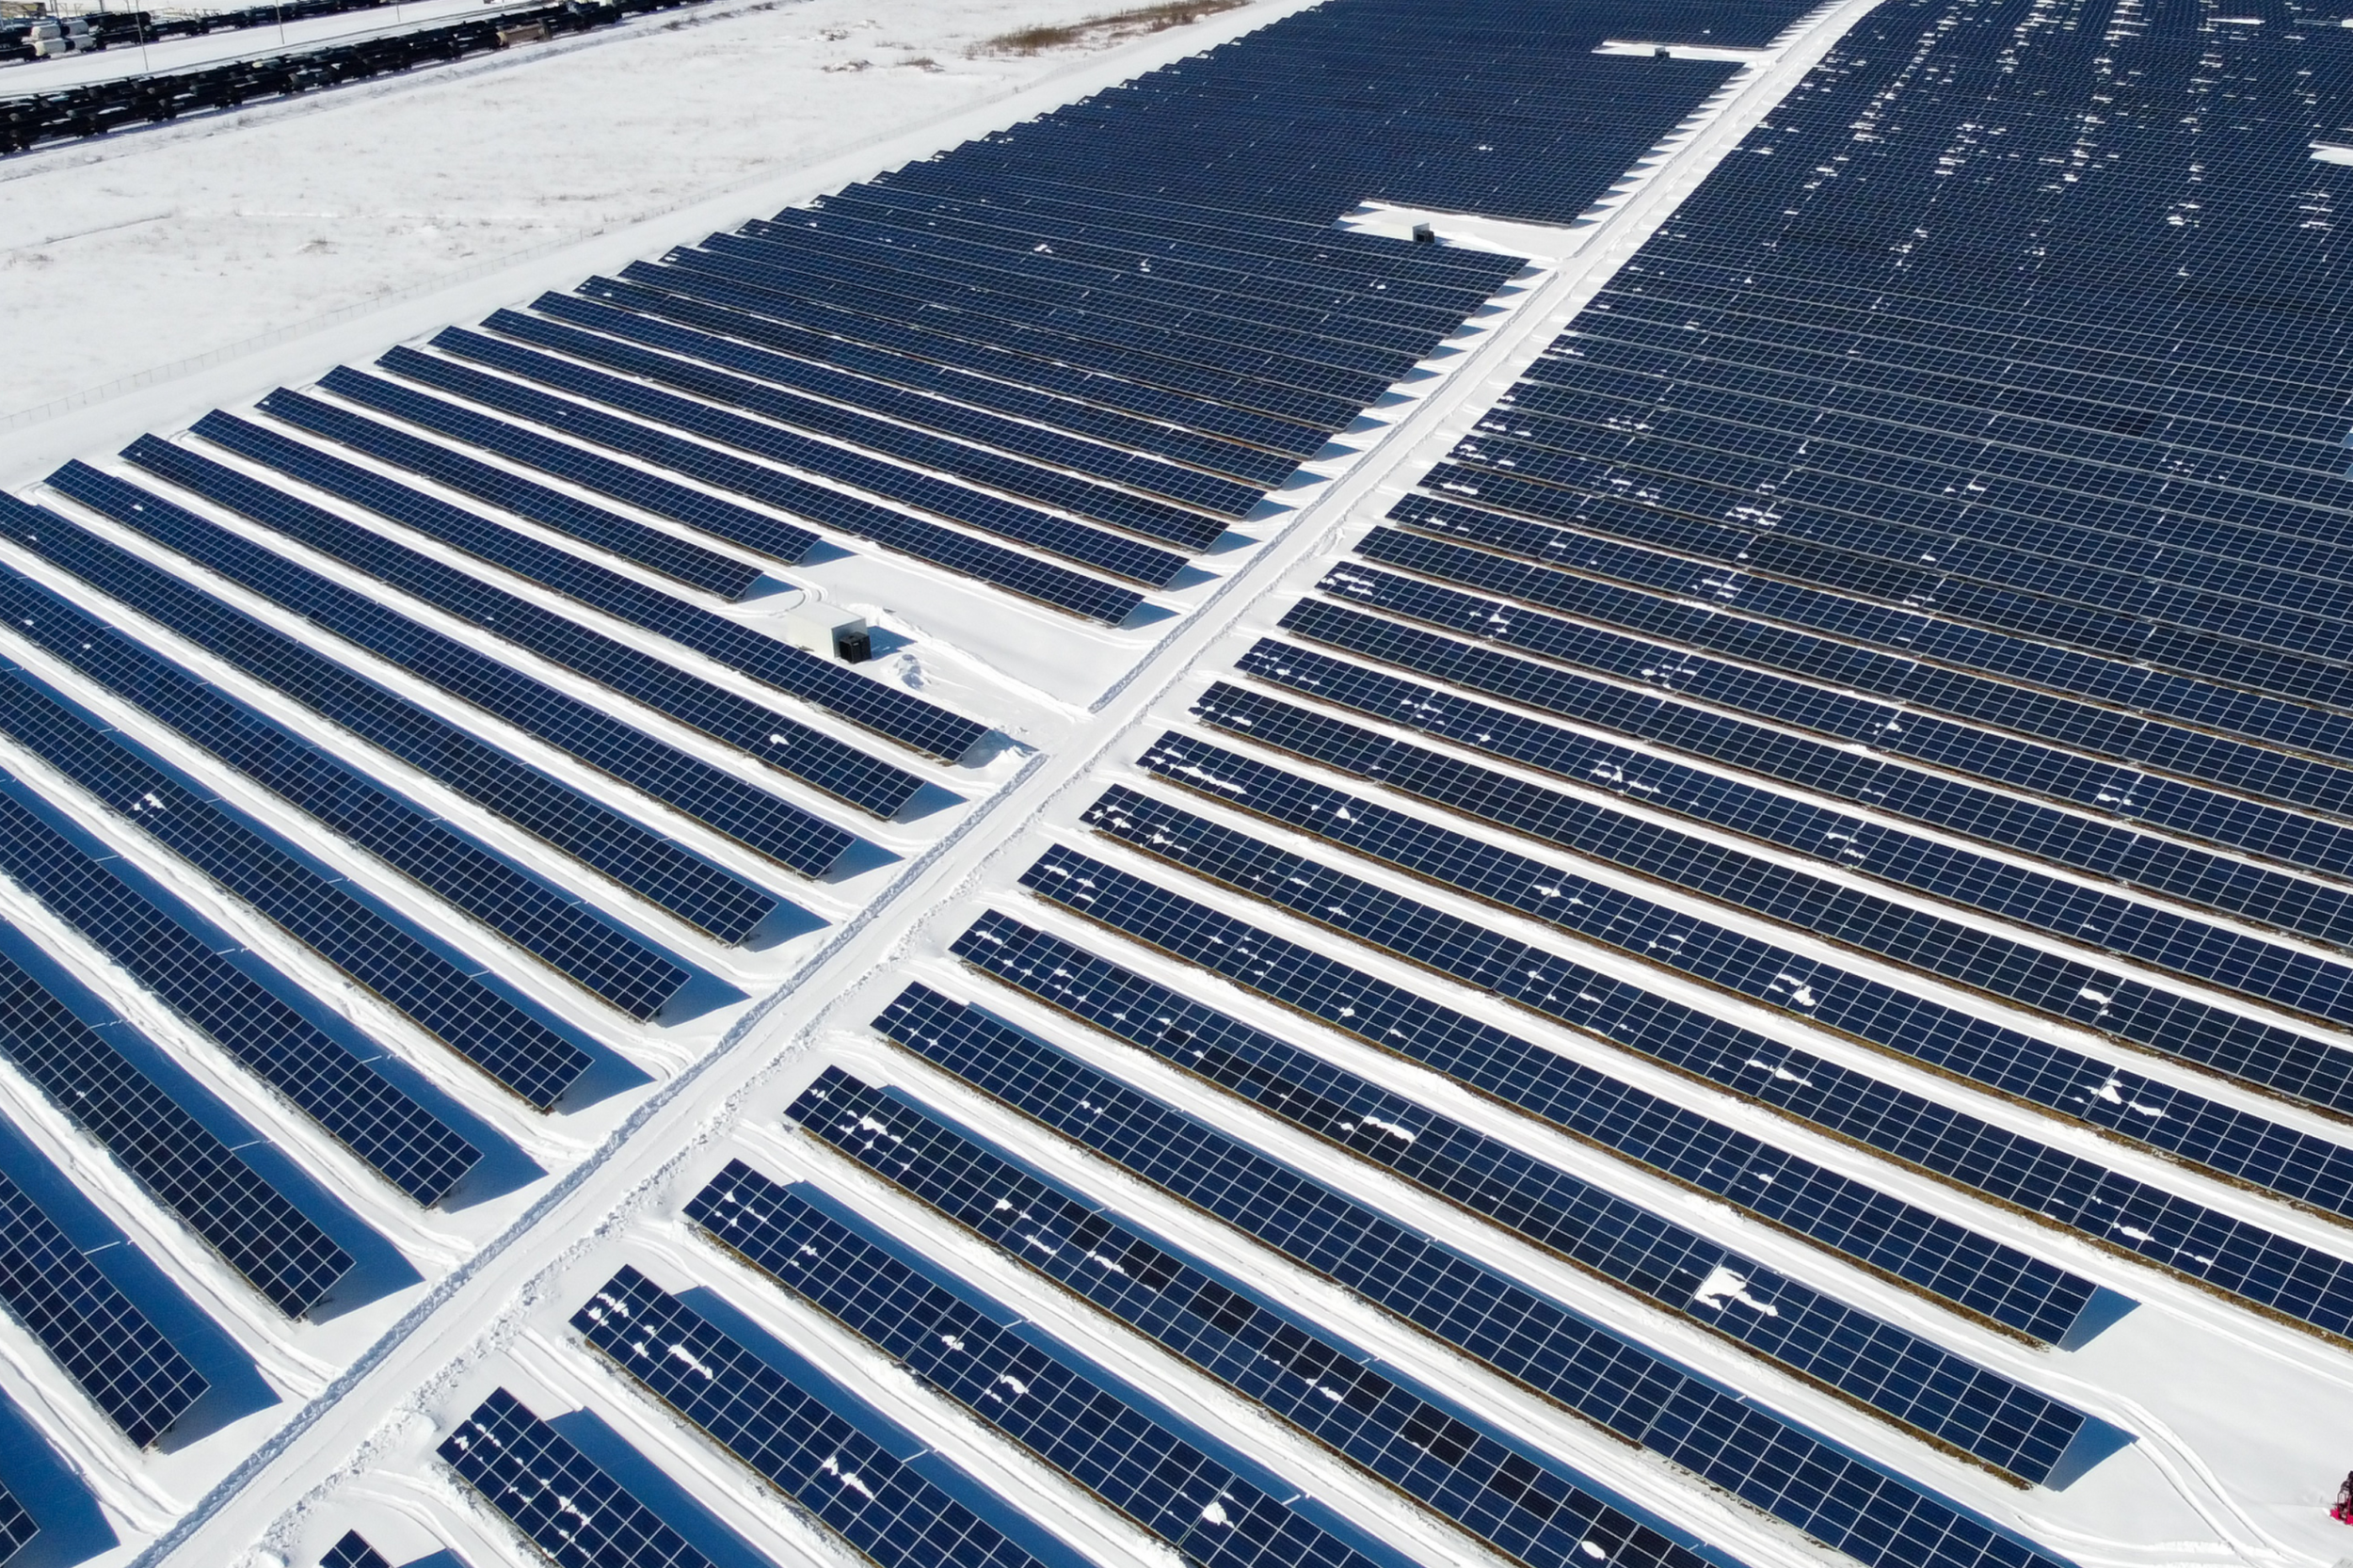 Maximizing solar power production during snow seasons